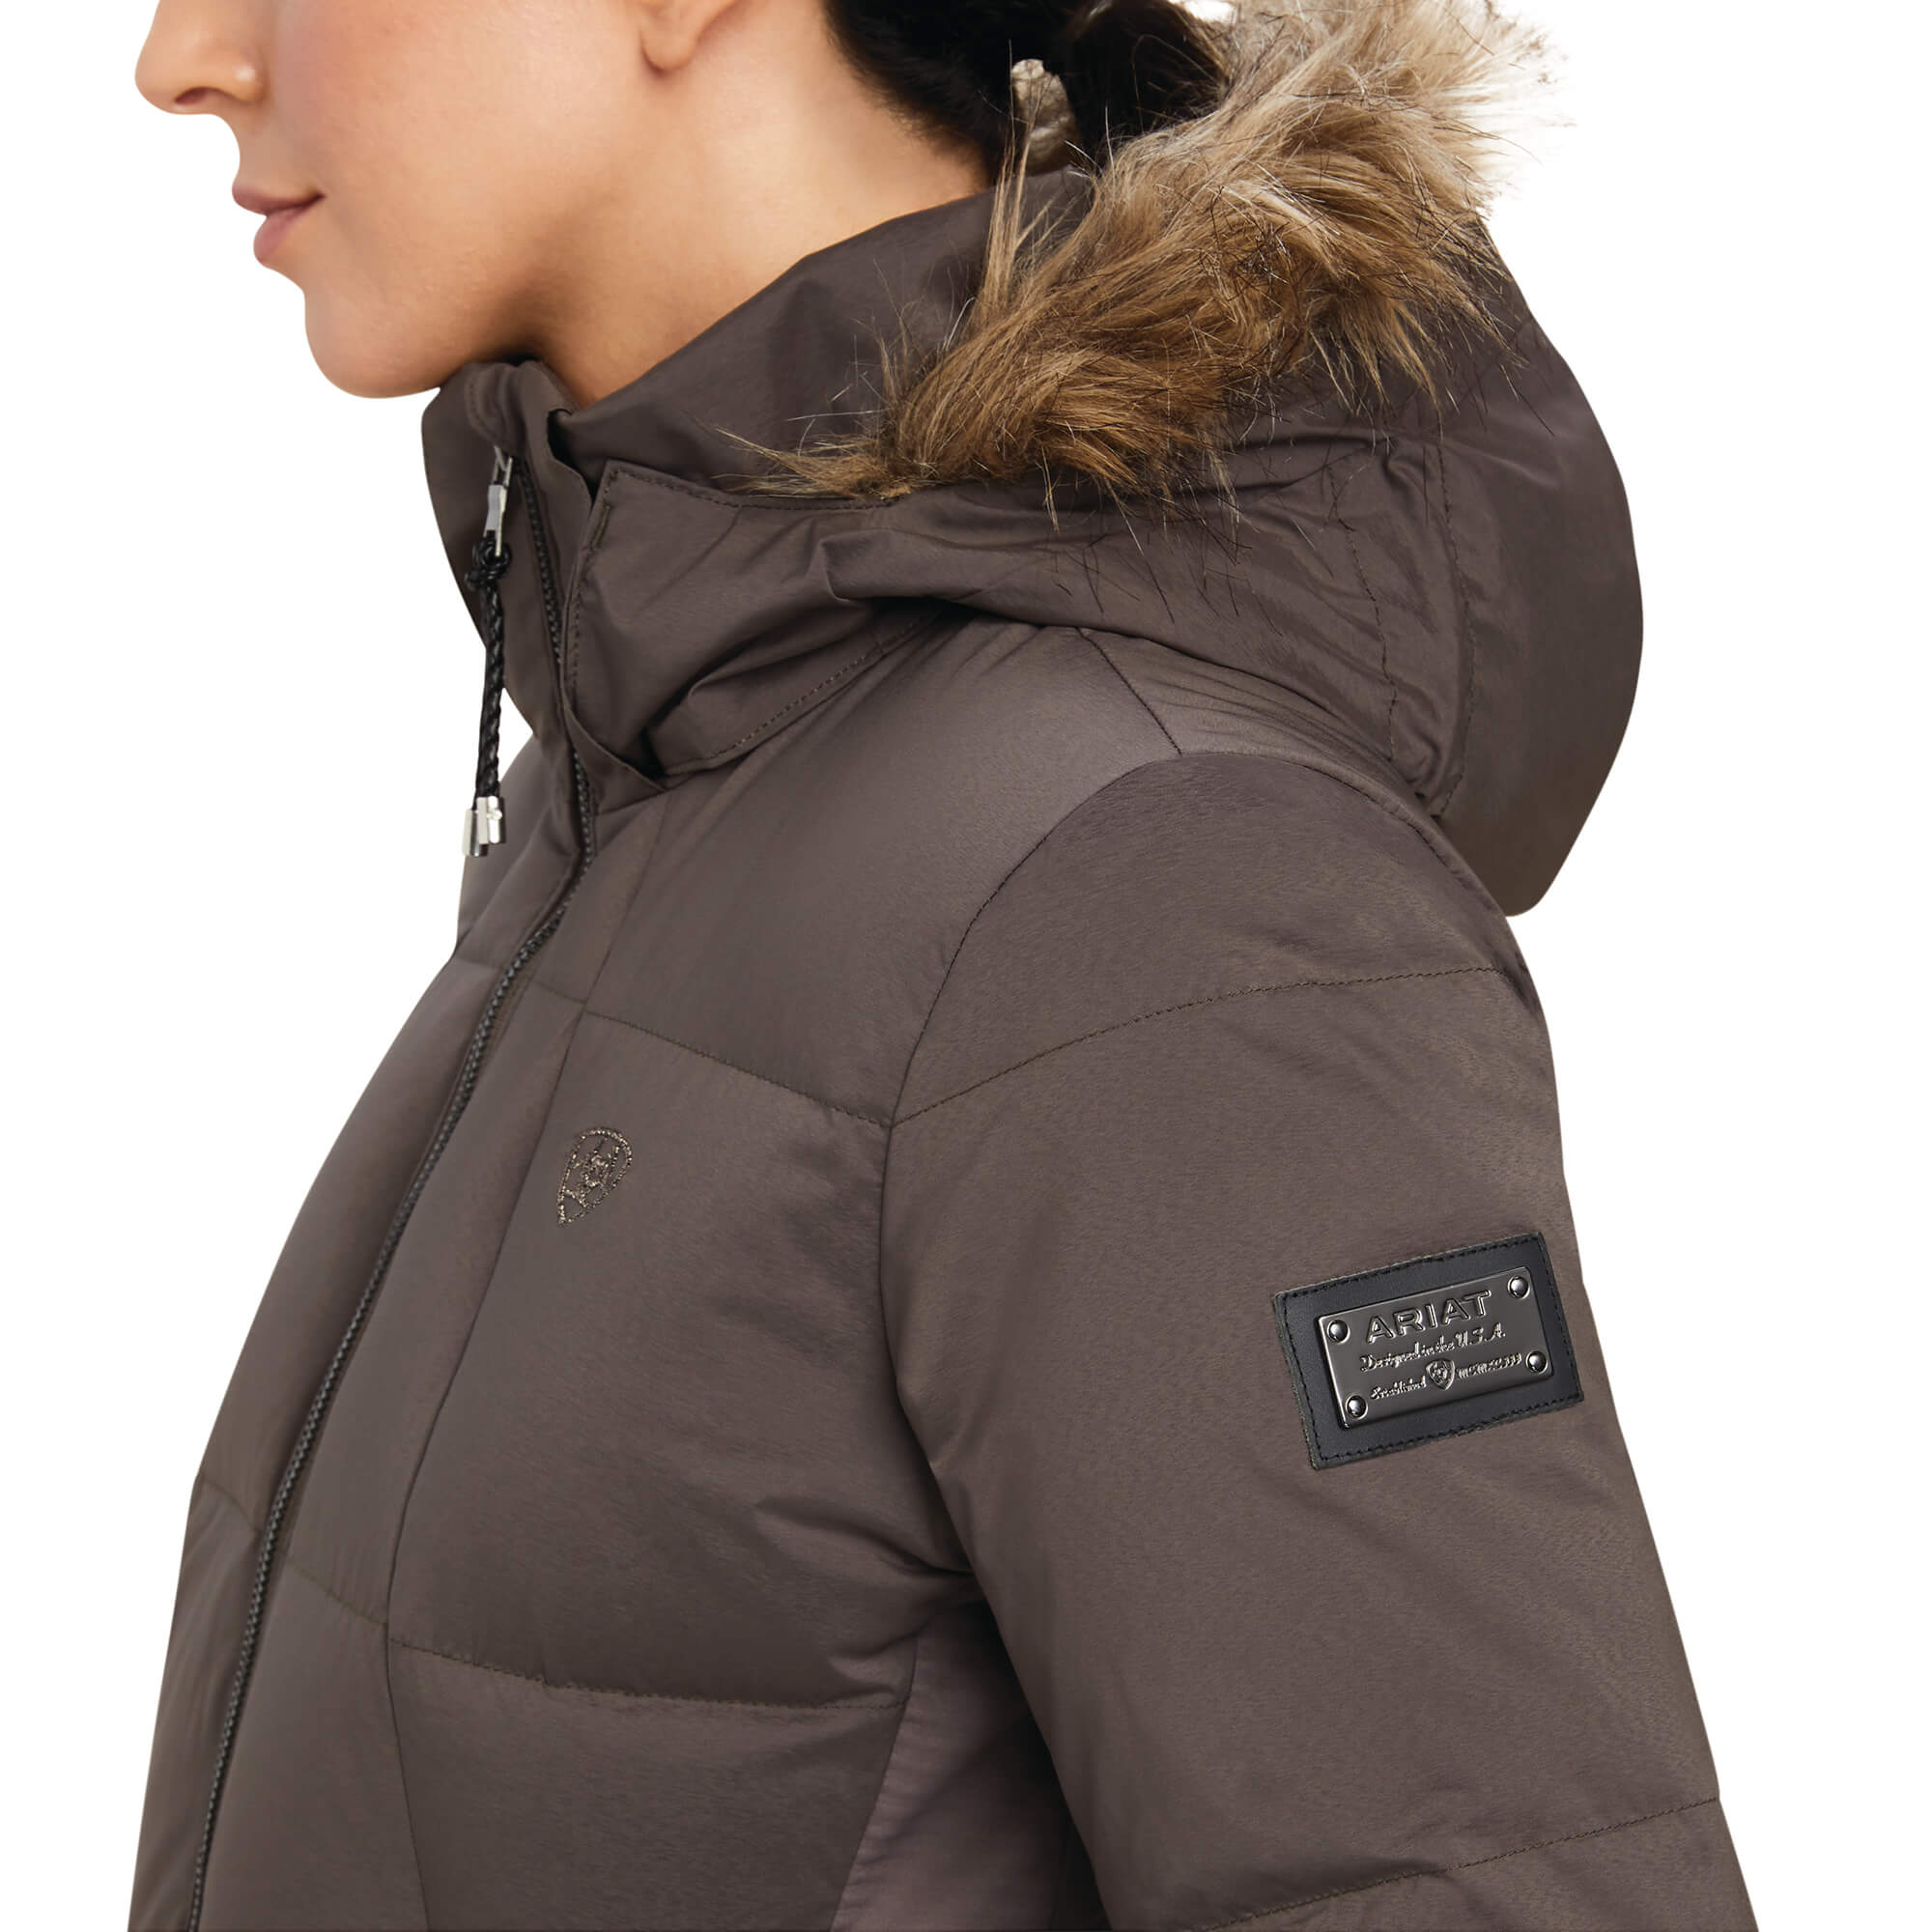 Ariat Women's Altitude Jacket - Bark